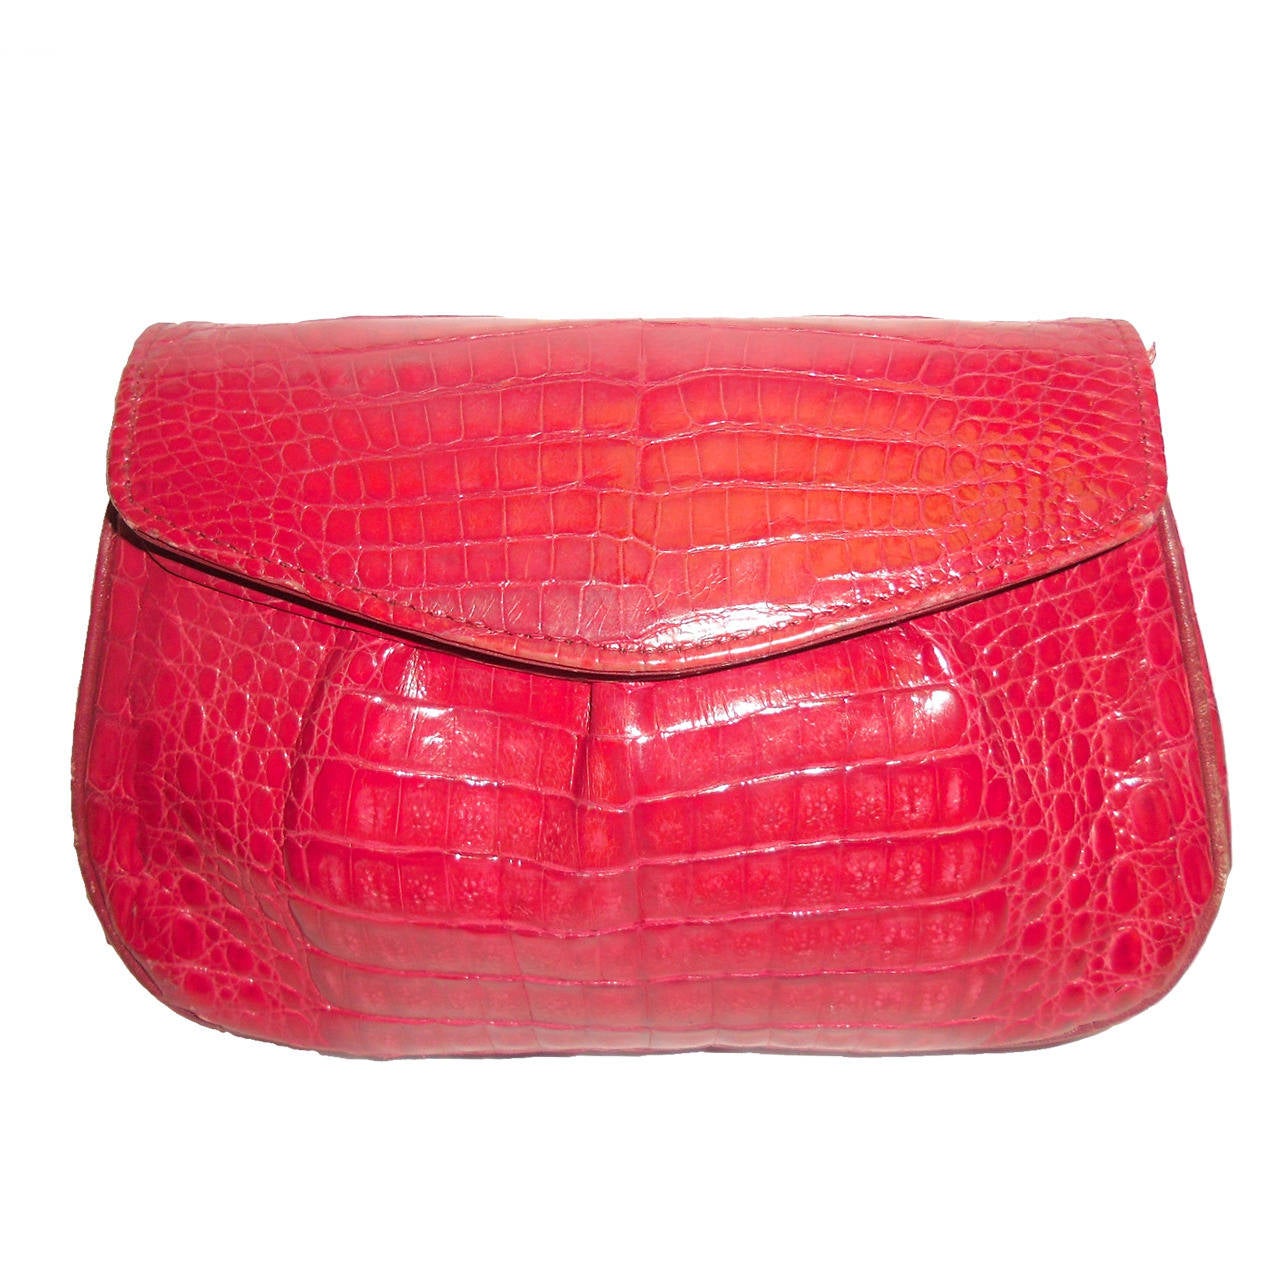 Red Alligator Crossbody bag/ clutch For Sale